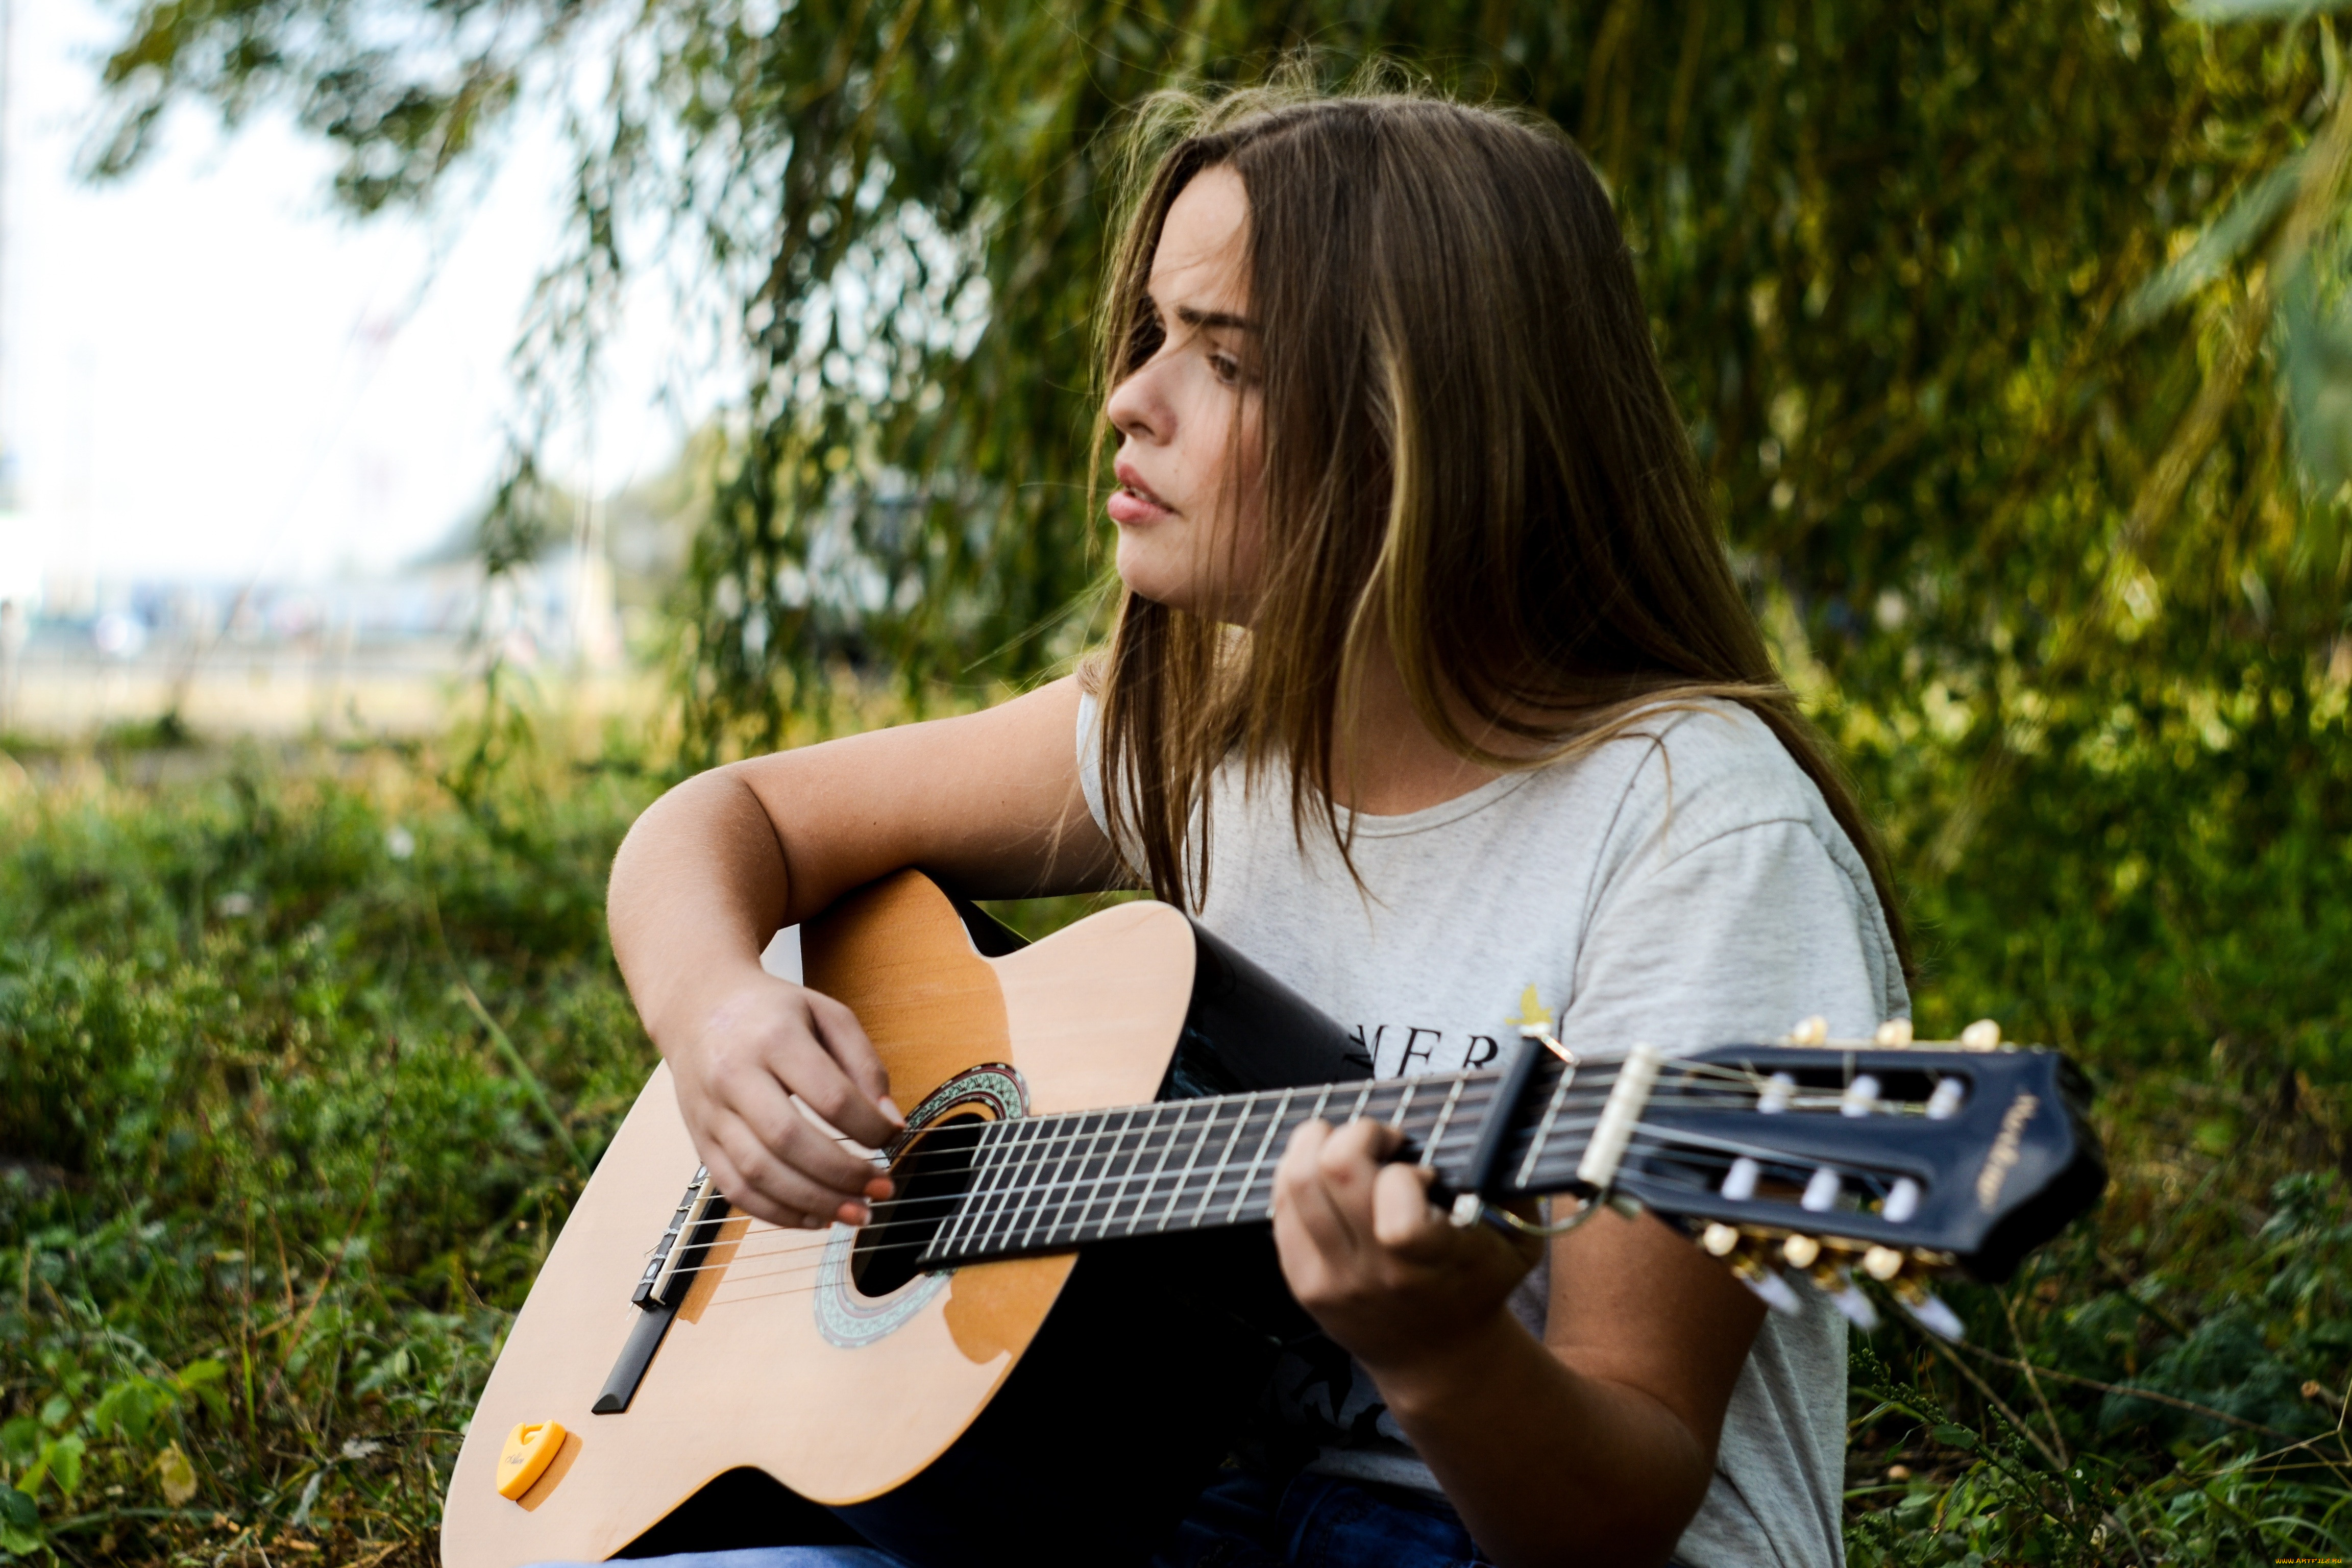 Песни играют рекламе. Девушка с гитарой. Девушка с электрогитарой. Девочка с гитарой. Фотосессия с гитарой.